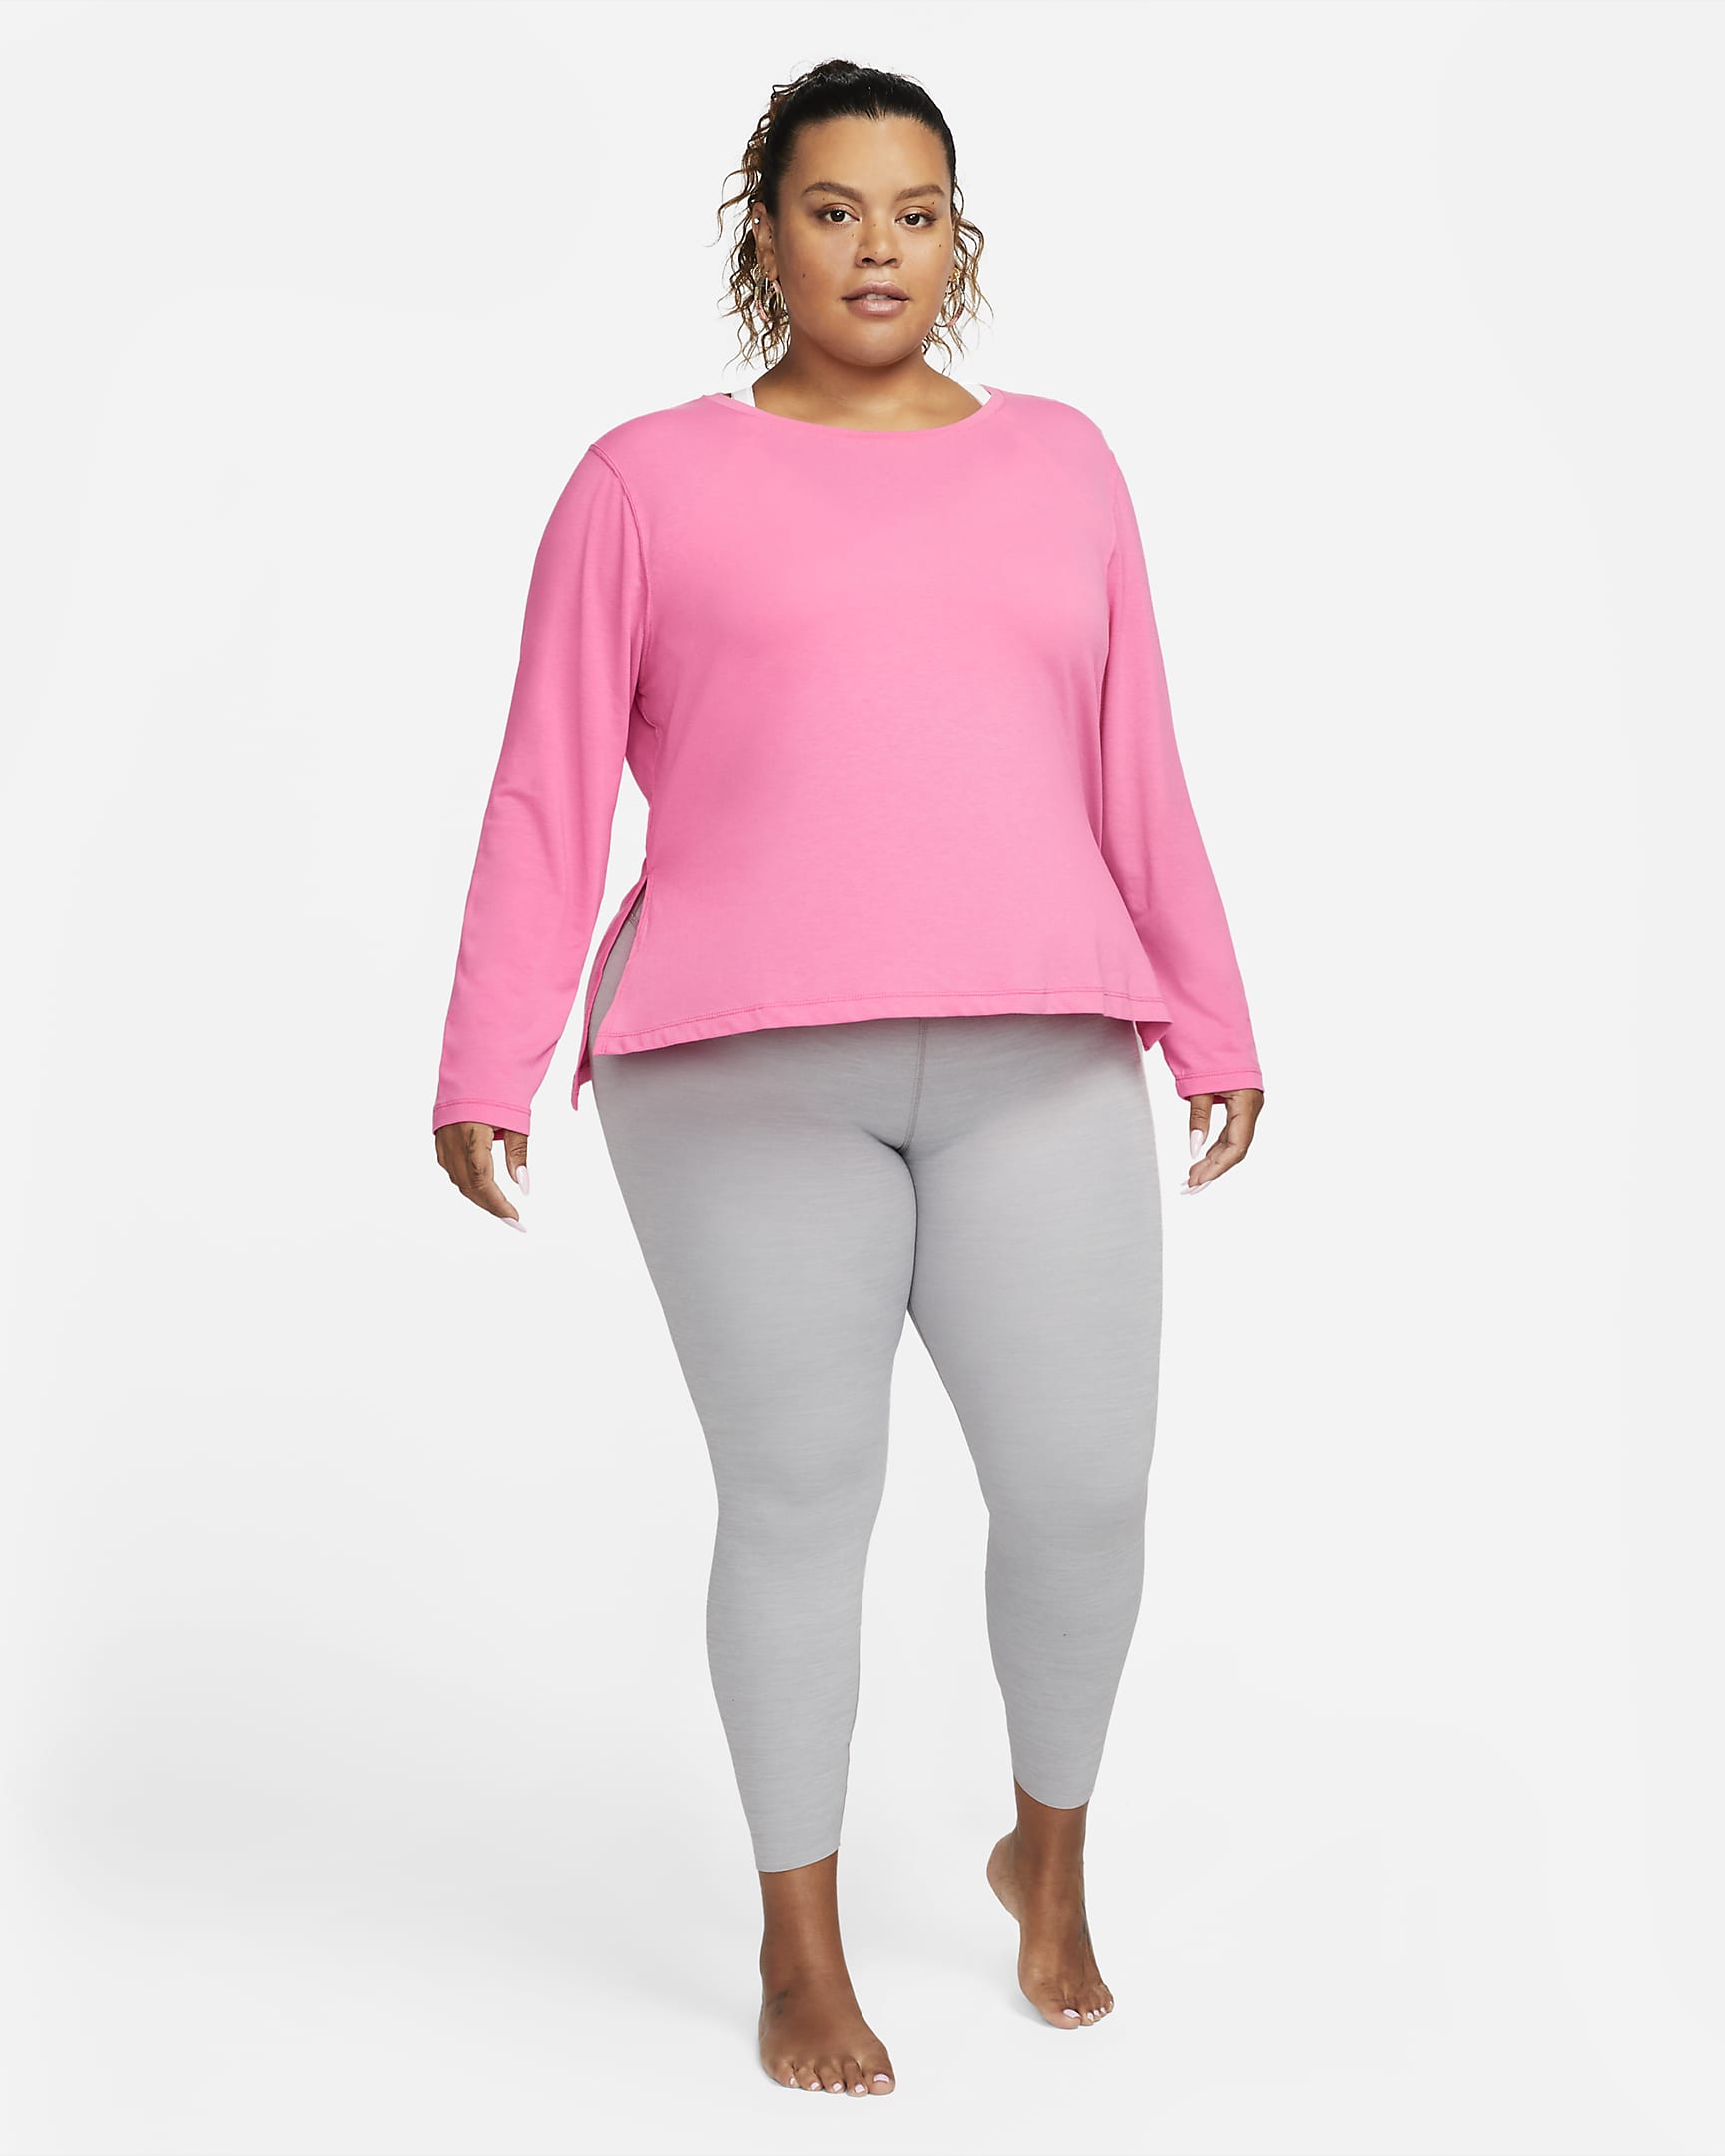 Nike Yoga Dri-FIT Women's Long-Sleeve Top (Plus Size) - Pinksicle/Particle Grey